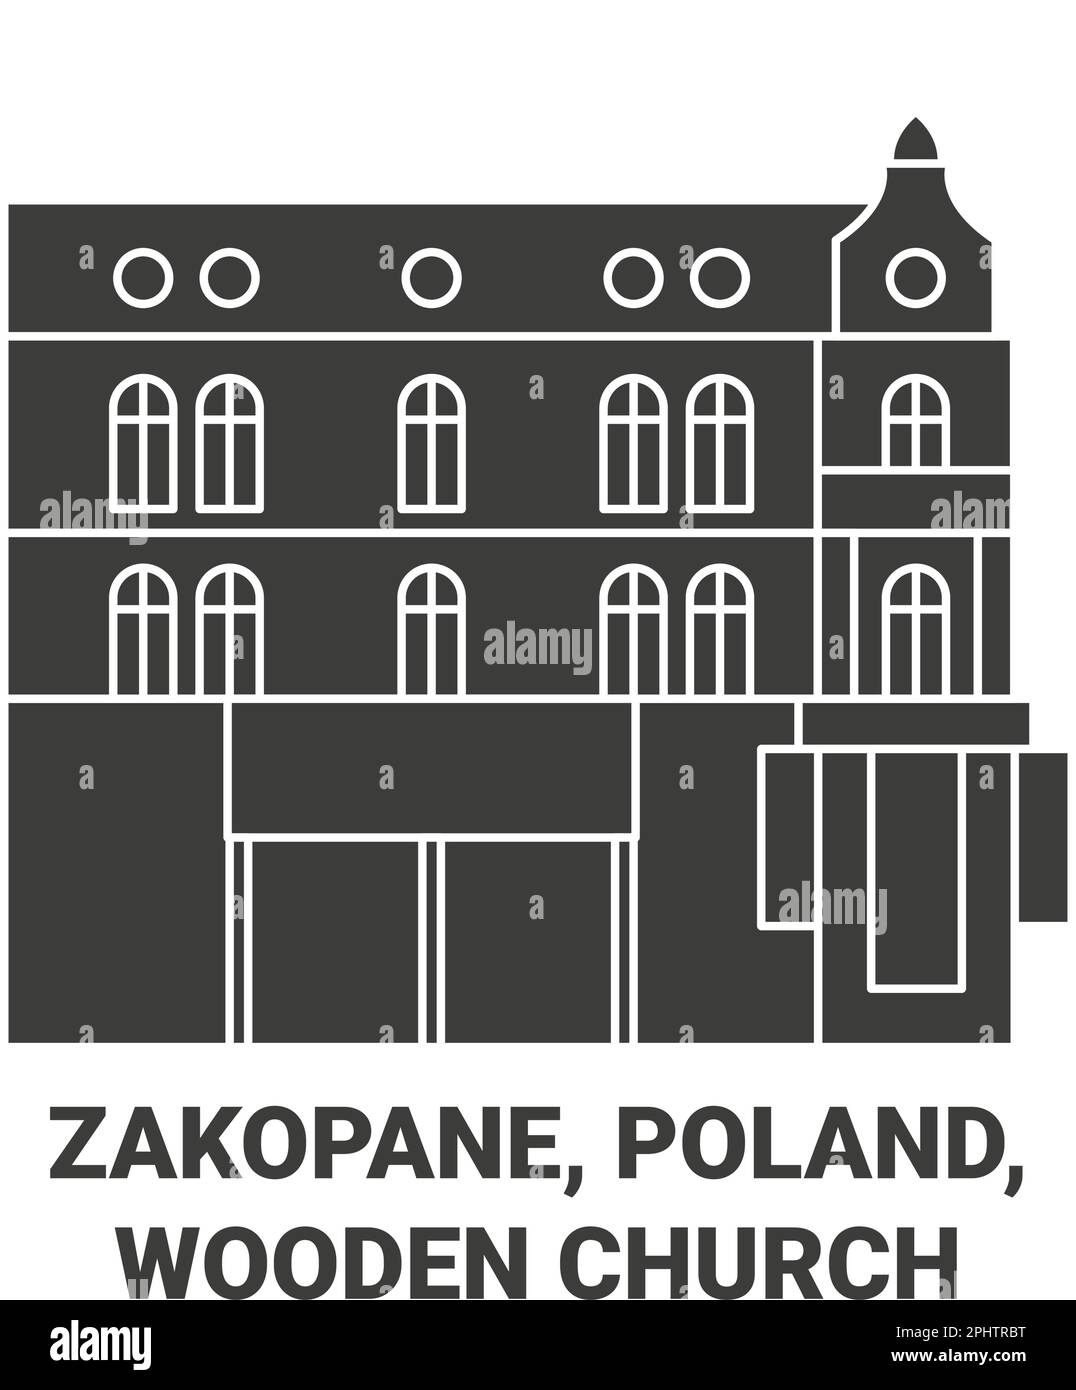 Poland, Zakopane, Wooden Church travel landmark vector illustration Stock Vector